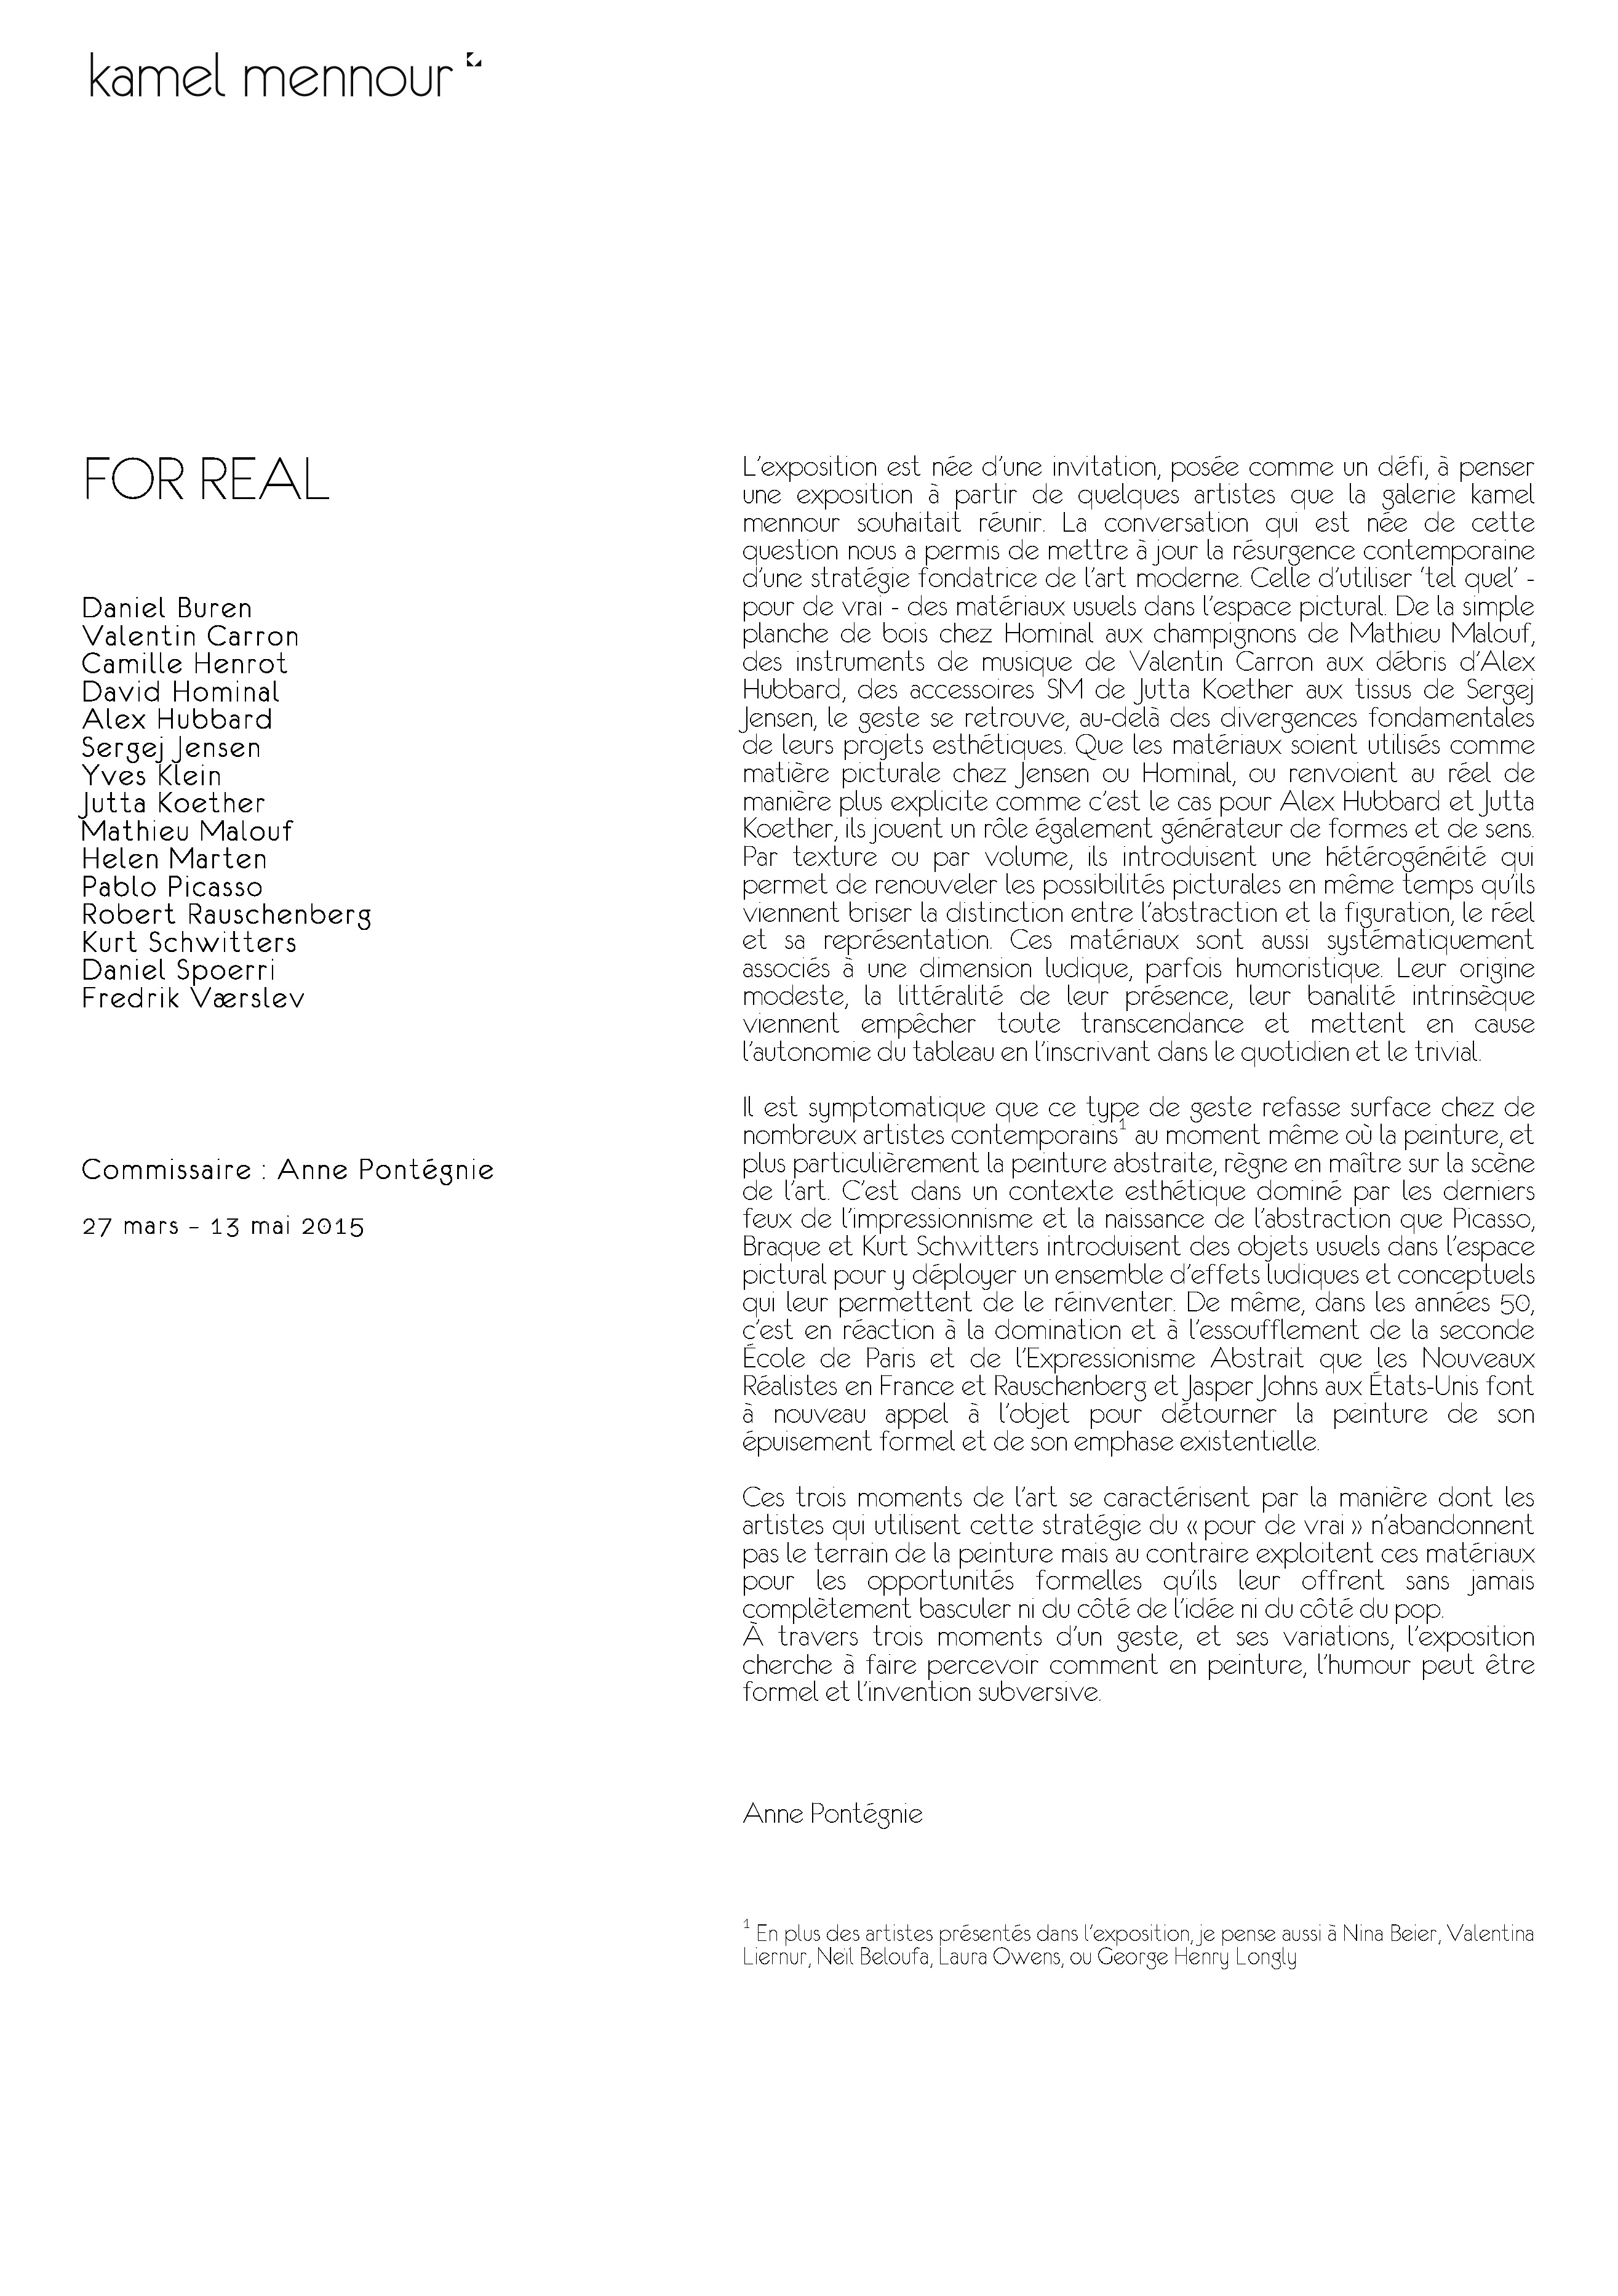 Anne Pontégnie, "For Real", Essay for the exhibition 'For Real', Kamel Mennour, Paris, 2015.